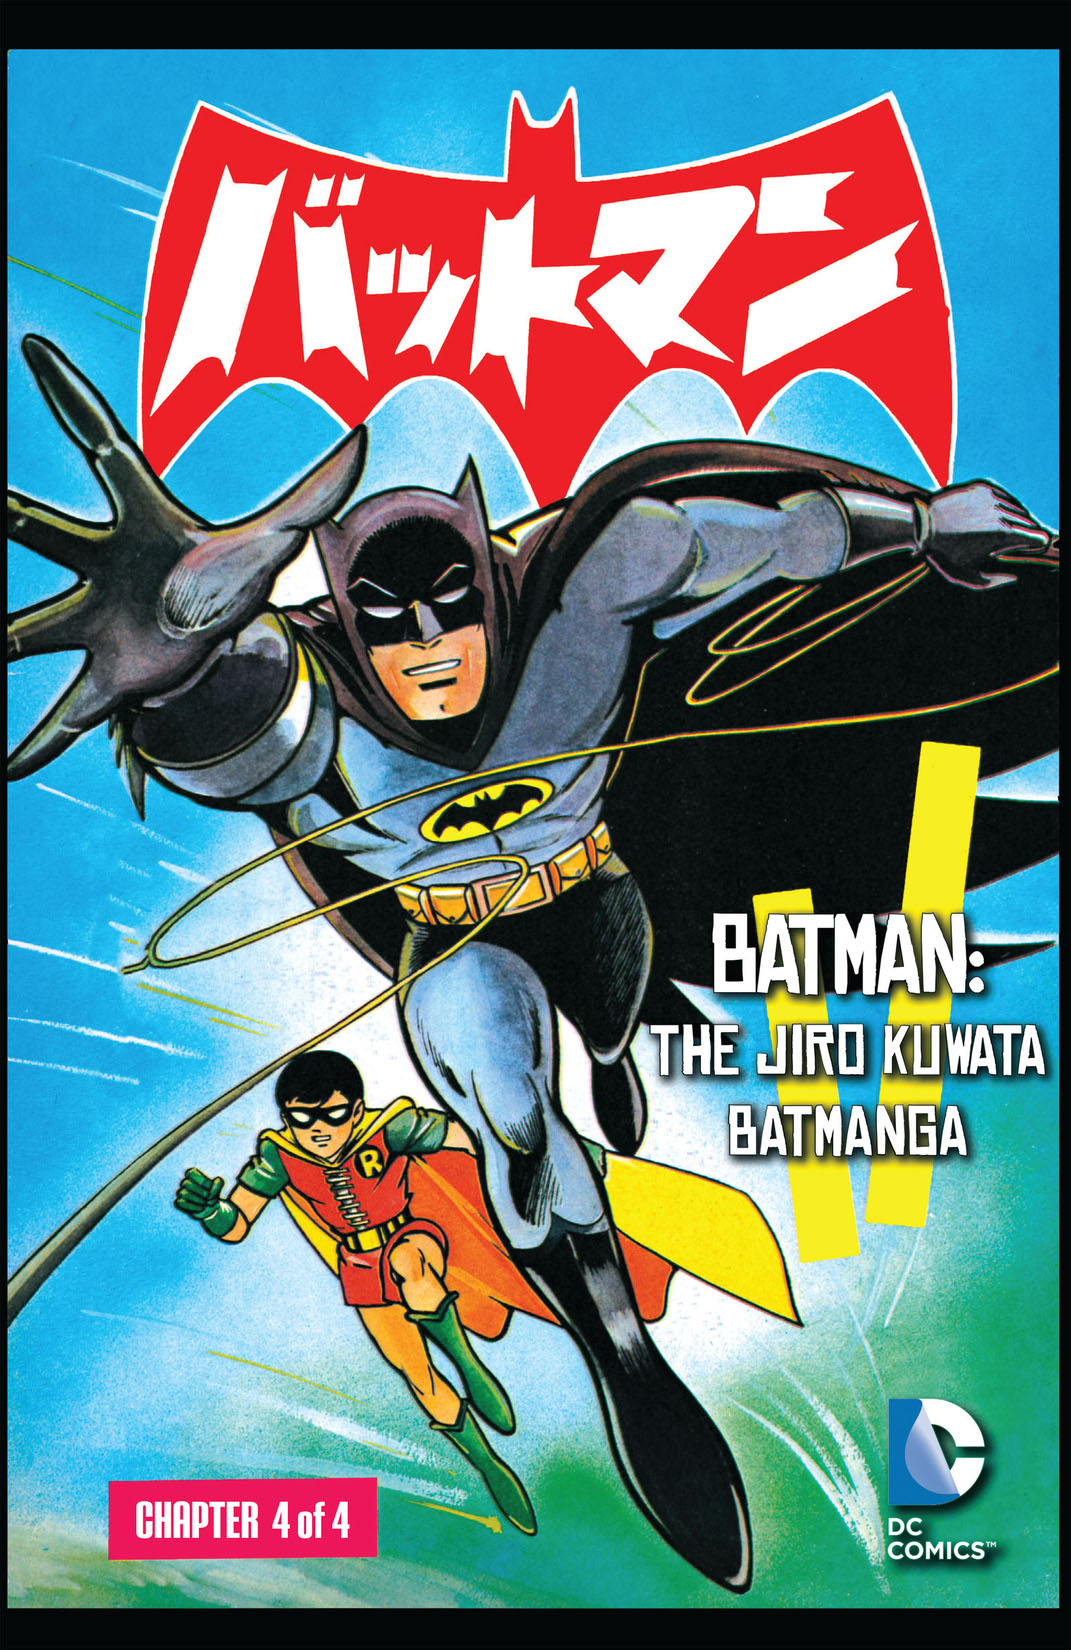 Batman: The Jiro Kuwata Batmanga #23 preview images